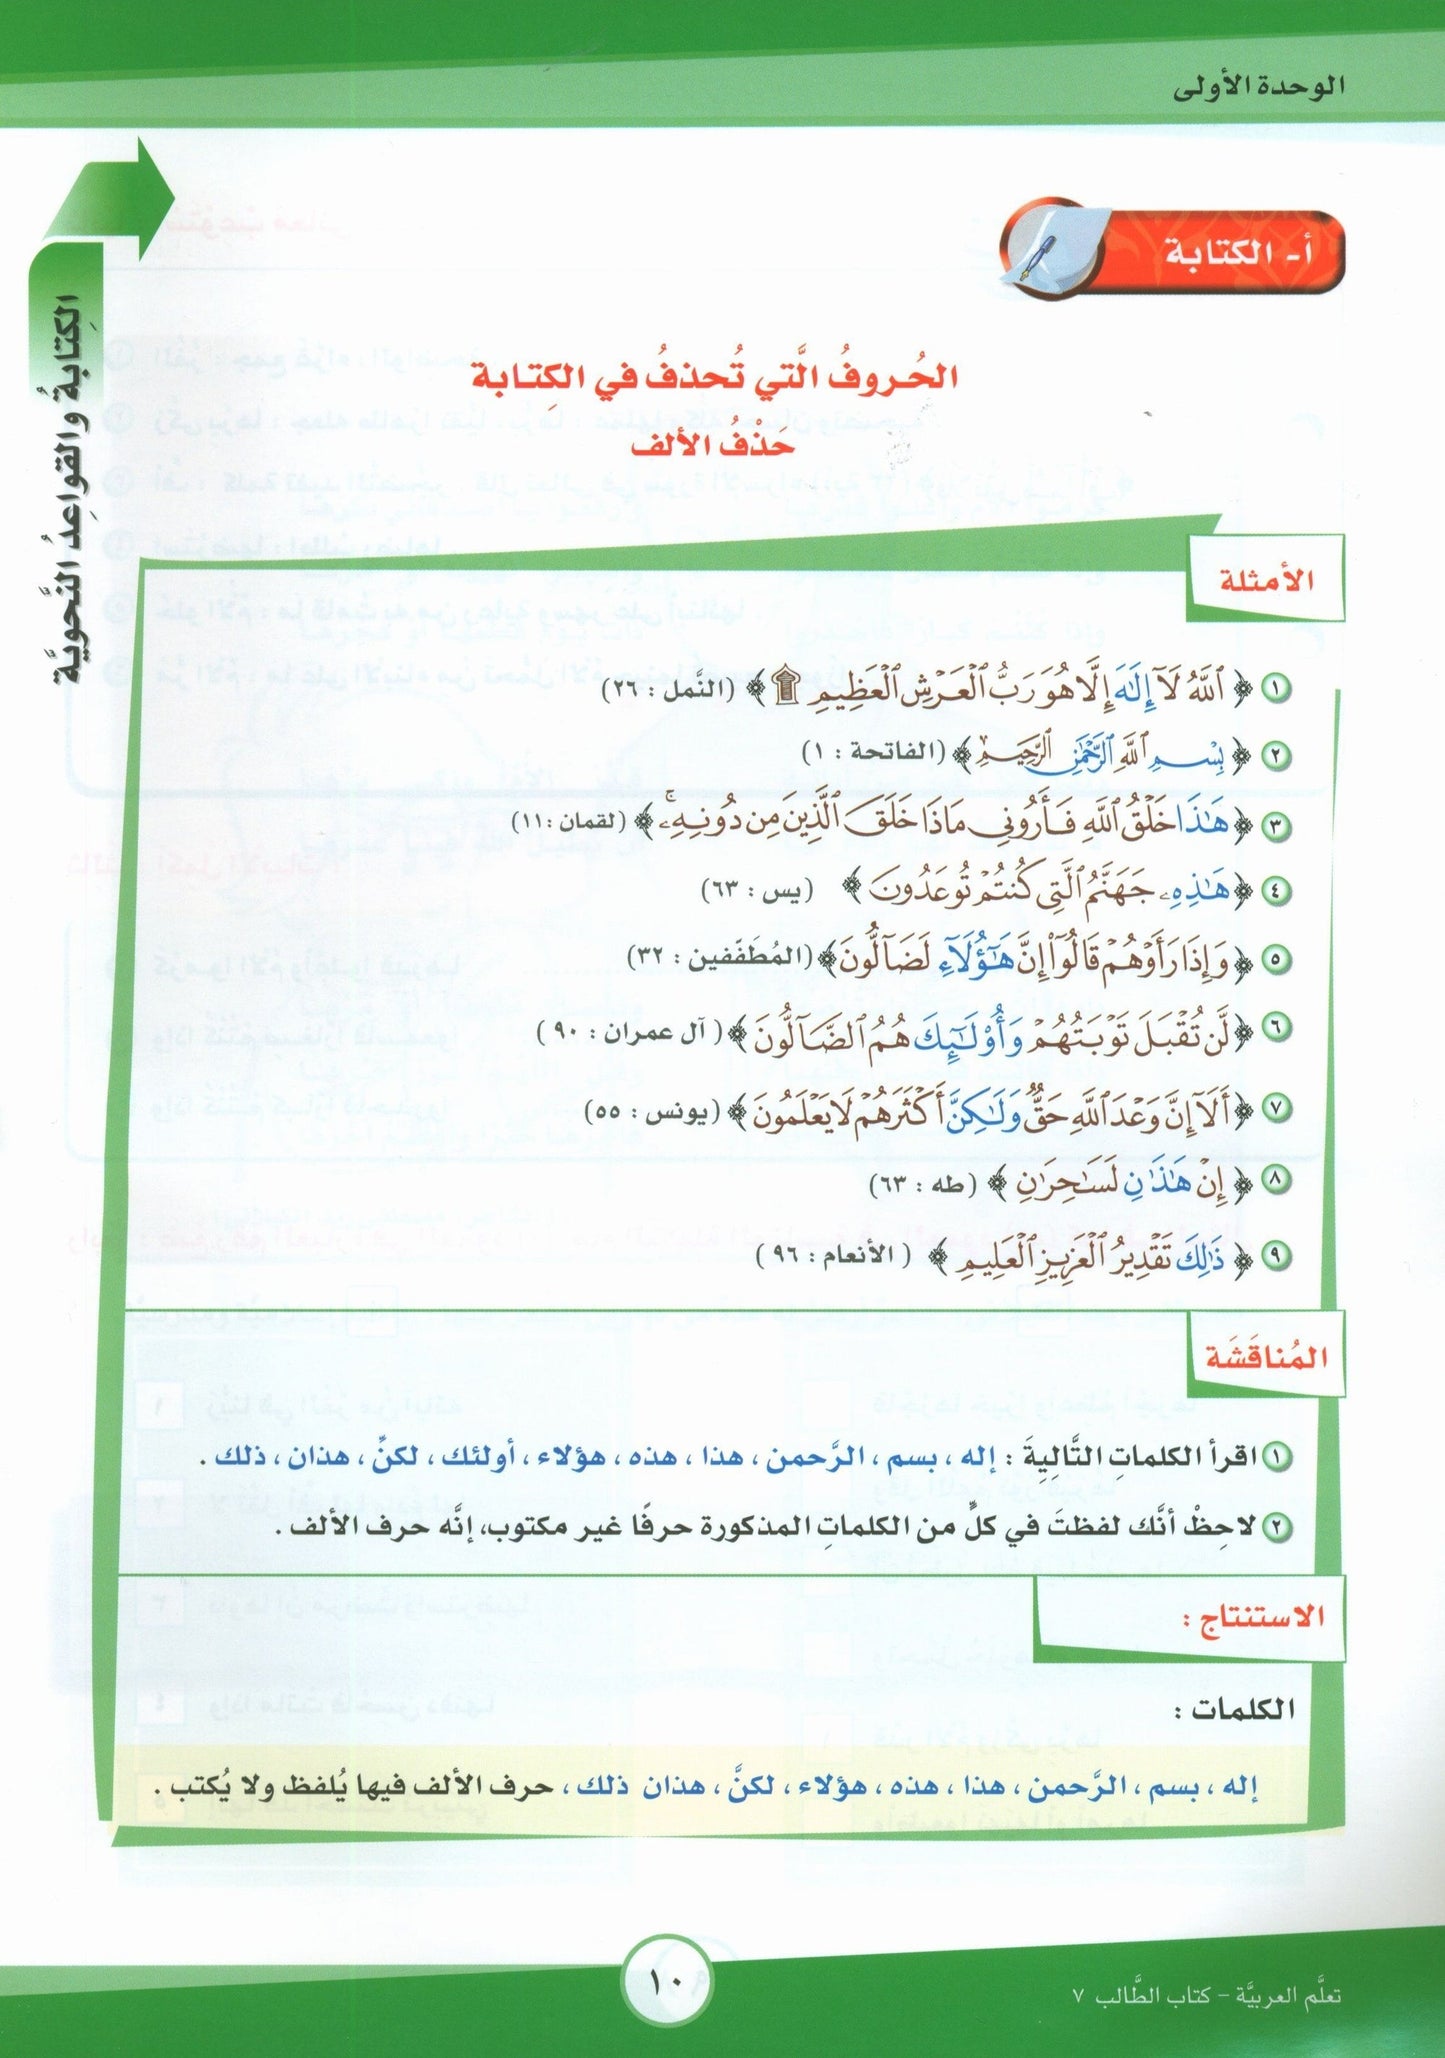 ICO Learn Arabic - Workbook - Level 7 Part 1 - تعلم العربية كتاب النشاط